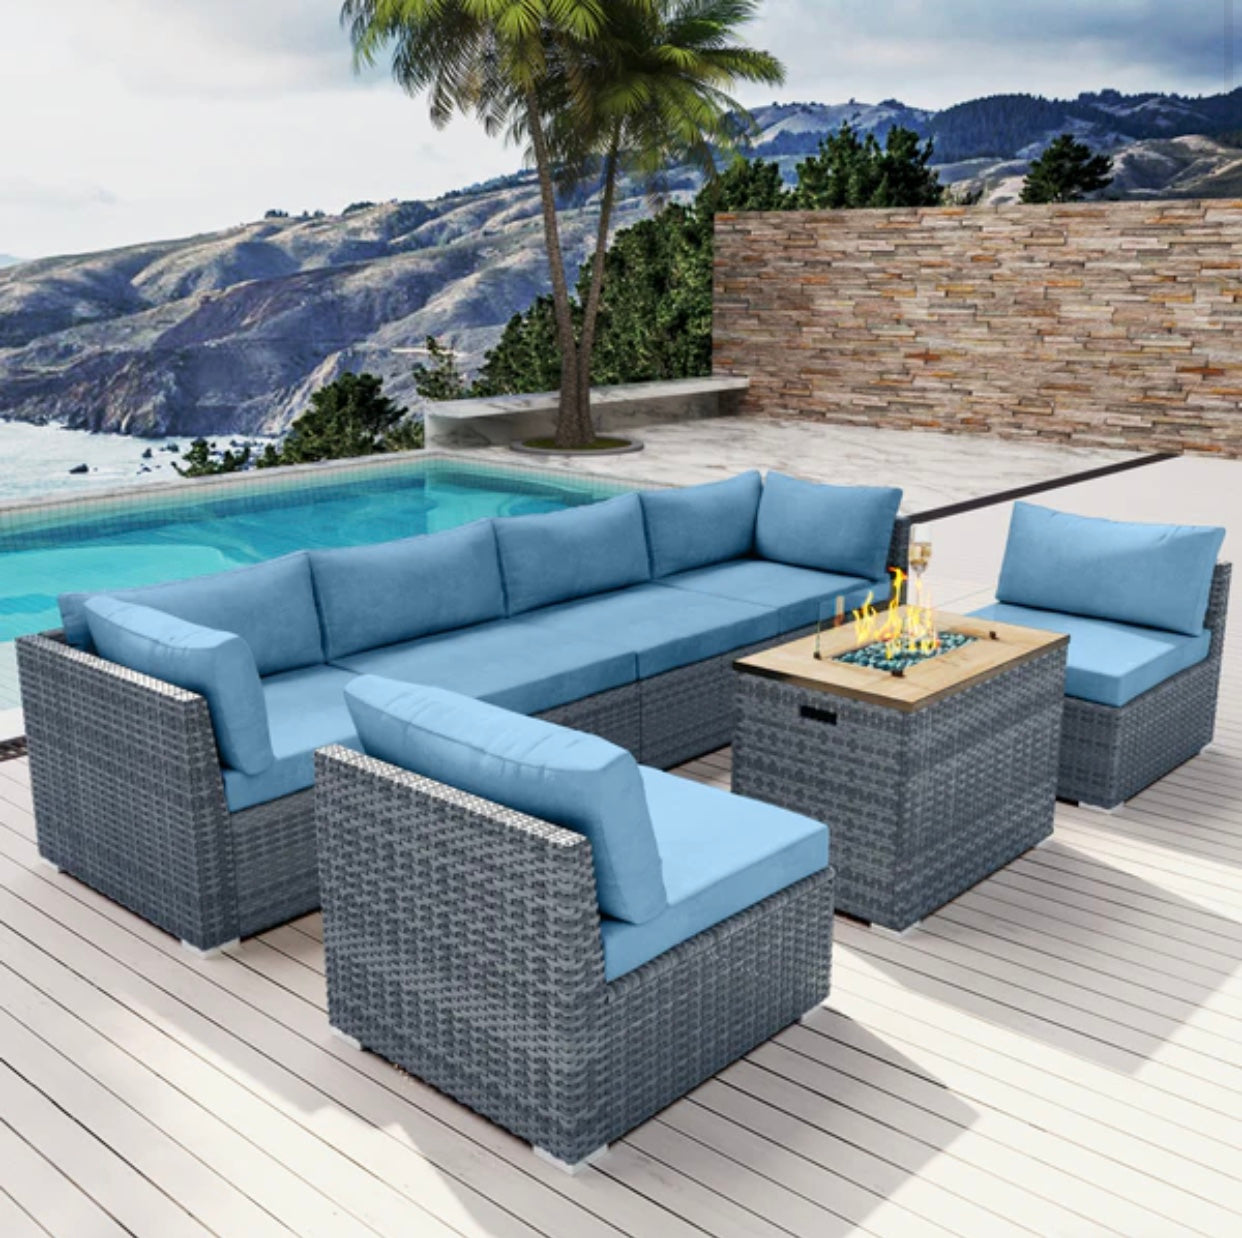 Blue 7 Seven piece Outdoor Patio Furniture with Propane Fire Pit Gray Wicker Santa Monica Beach